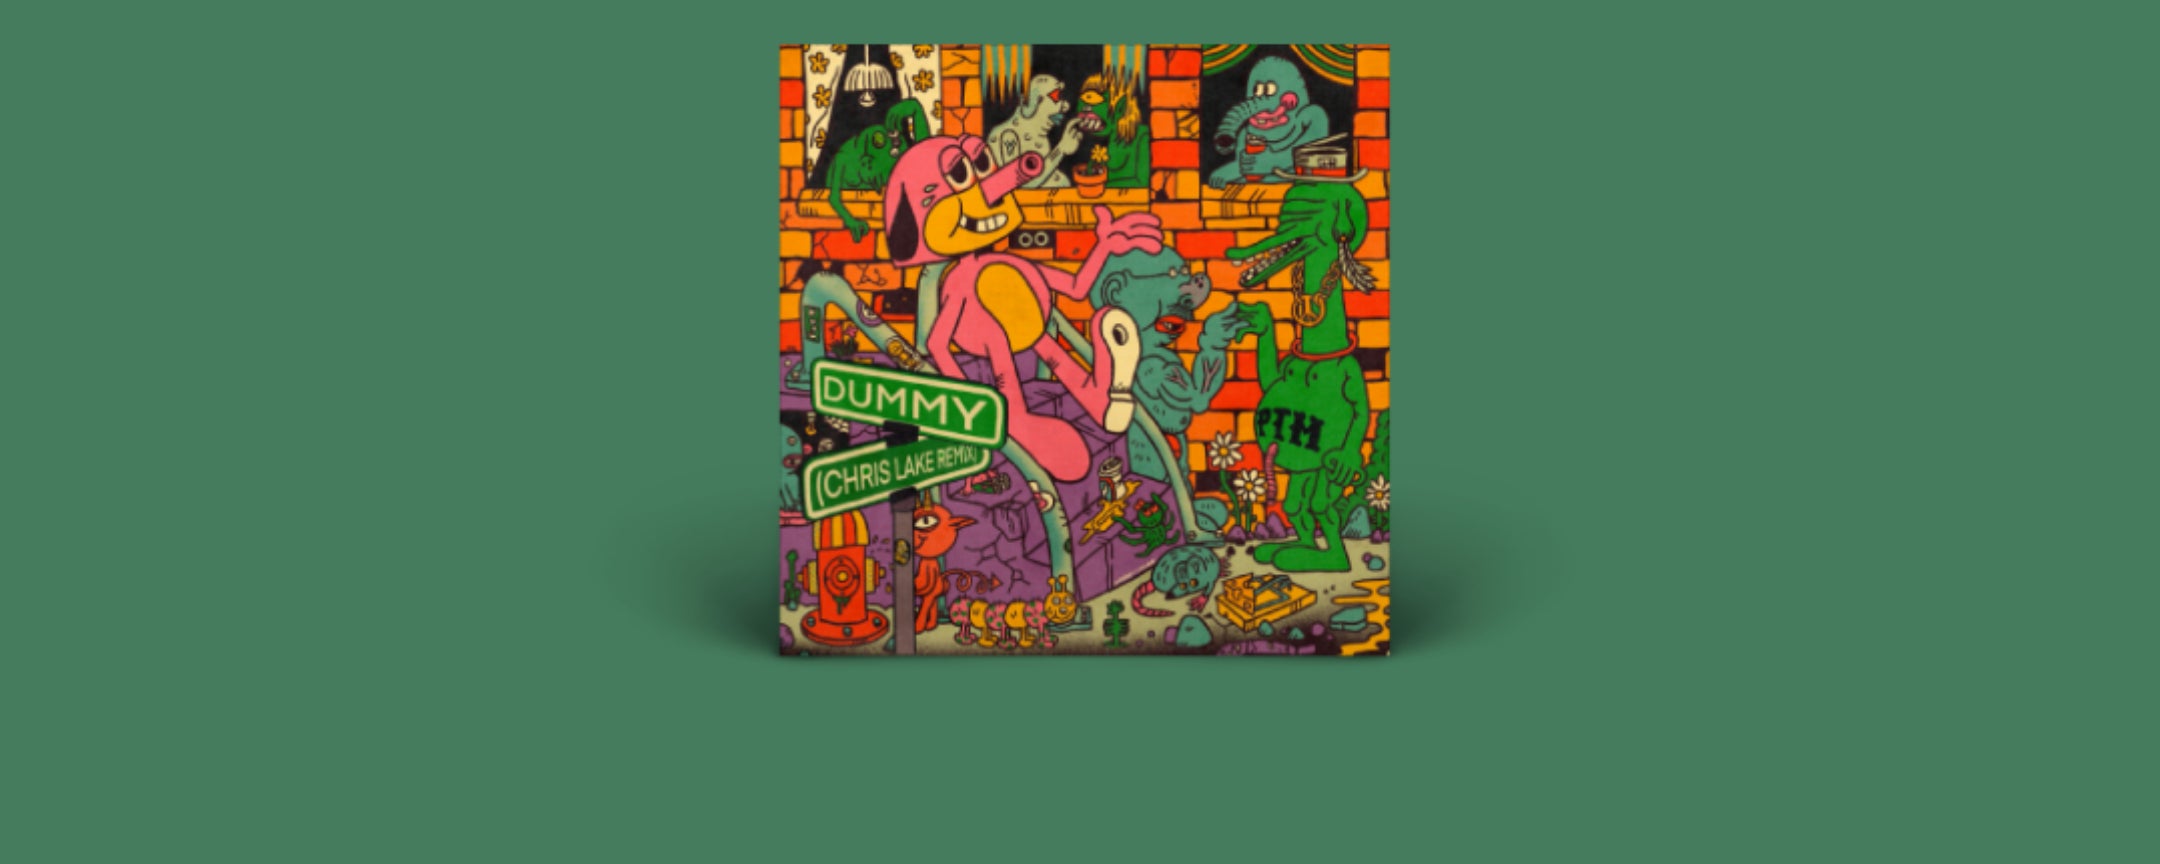 Dummy – Chris Lake Remix